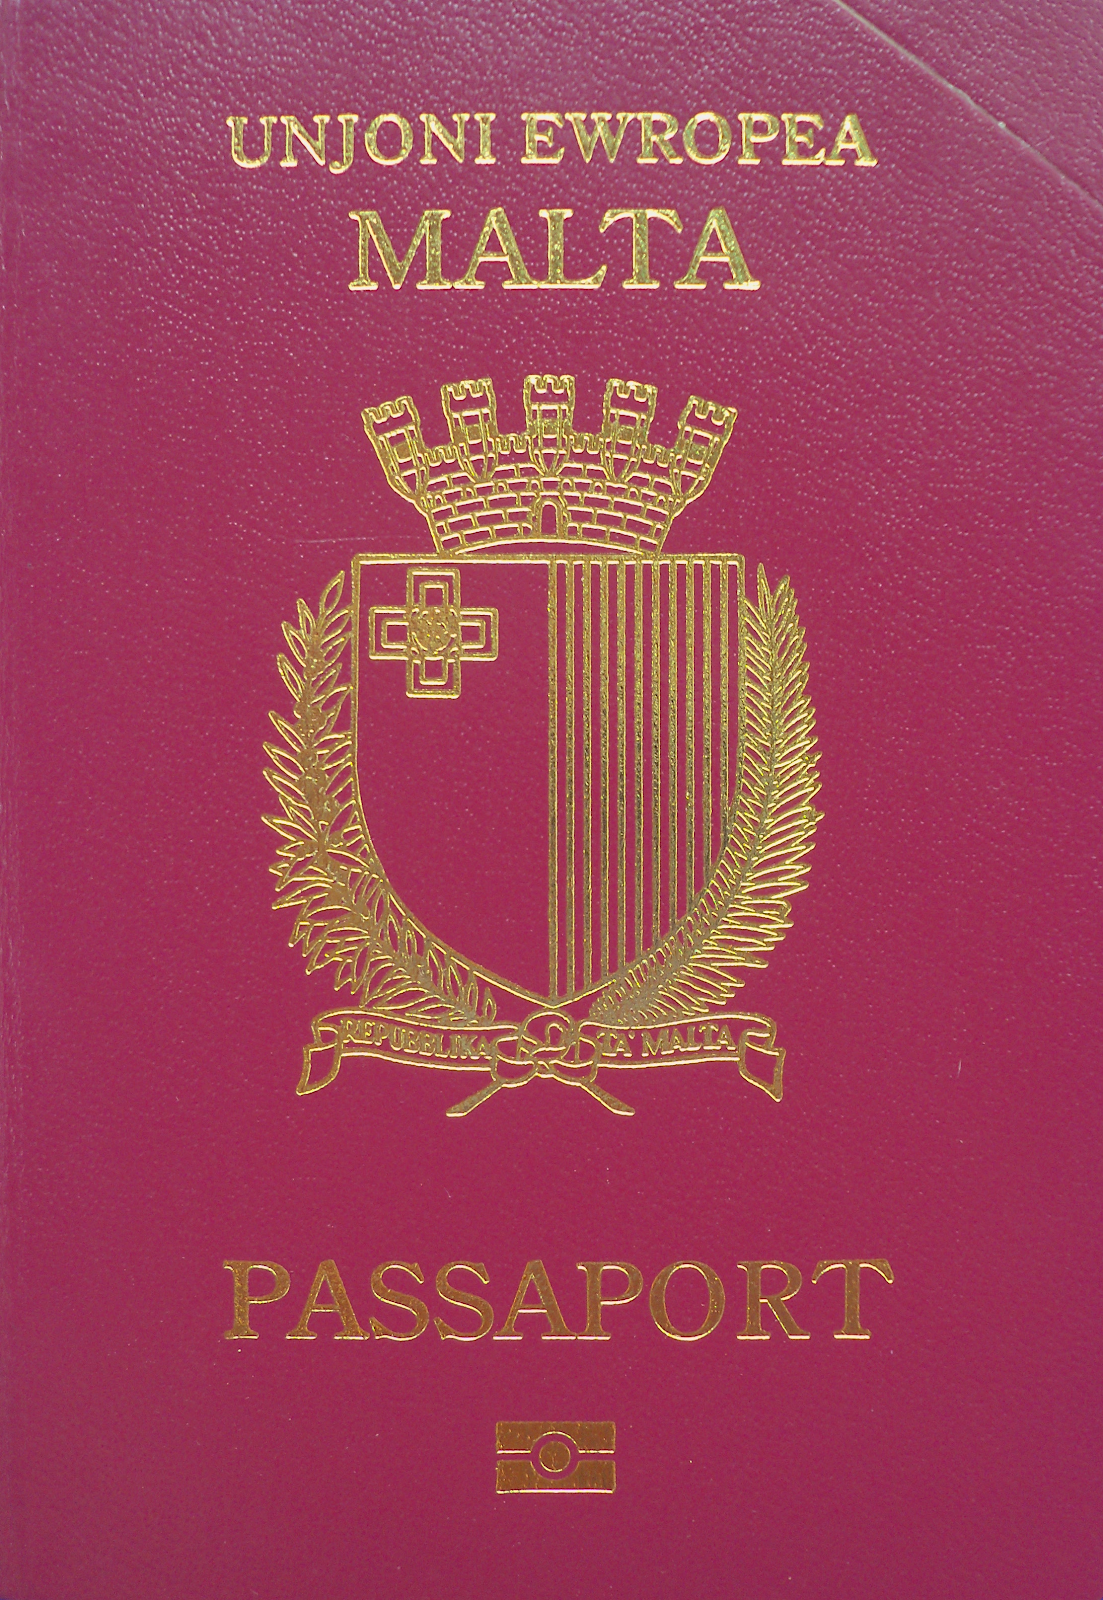 Maltese passport cover